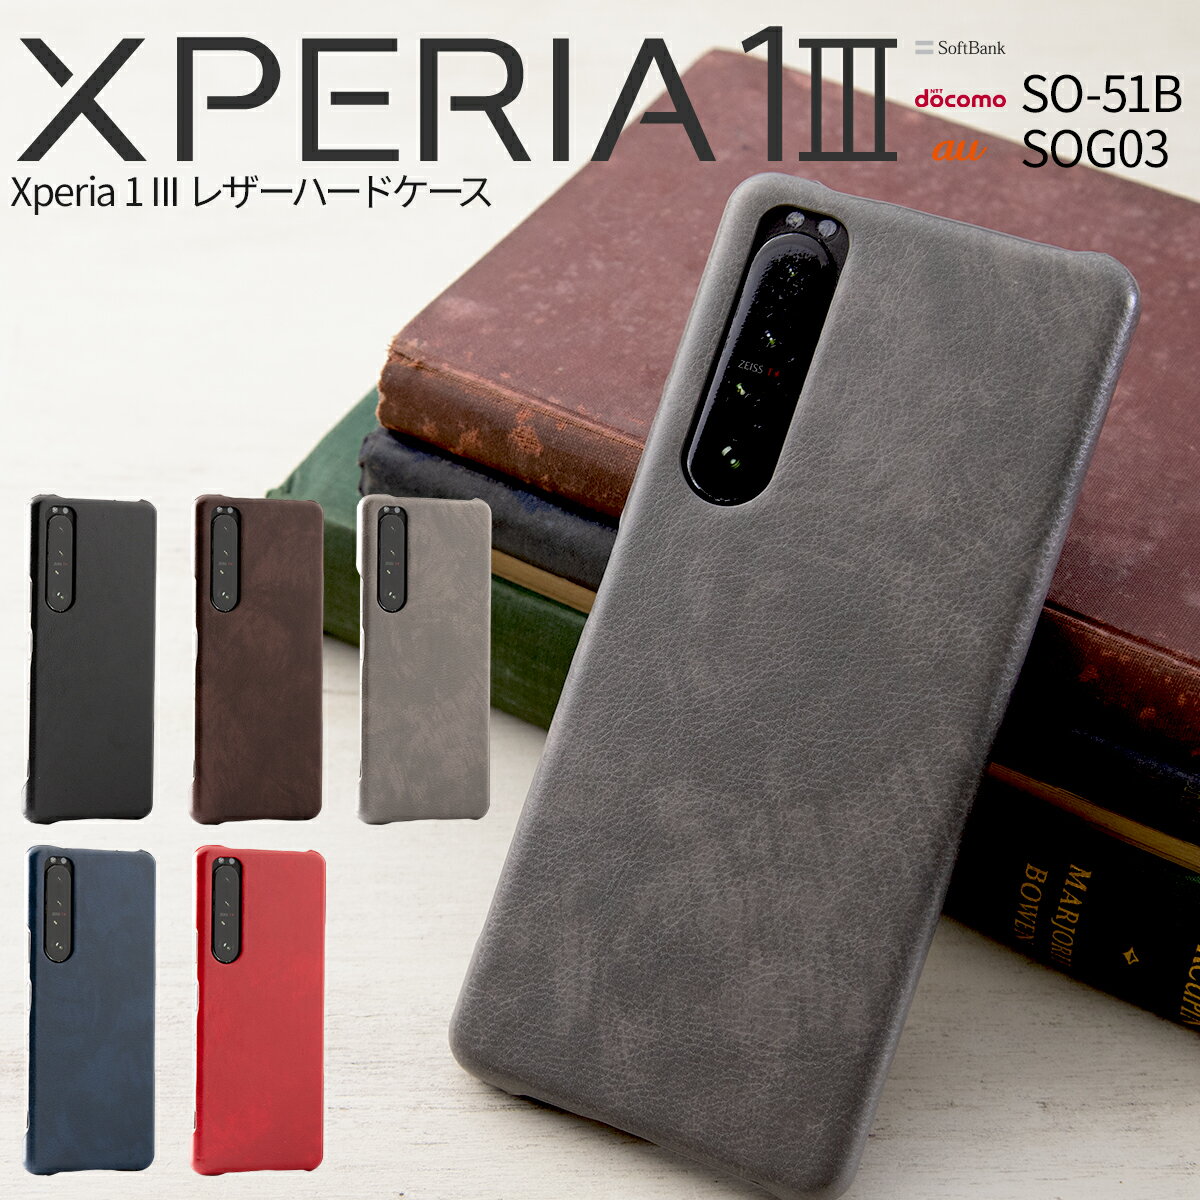  Xperia 1 III SO-51B SOG03 スマホ カバー スマホケース かっこいい おしゃれ 人気 レザー 革 ハードケース エクスペリア レザーハードケース sale 携帯ケース 携帯カバー